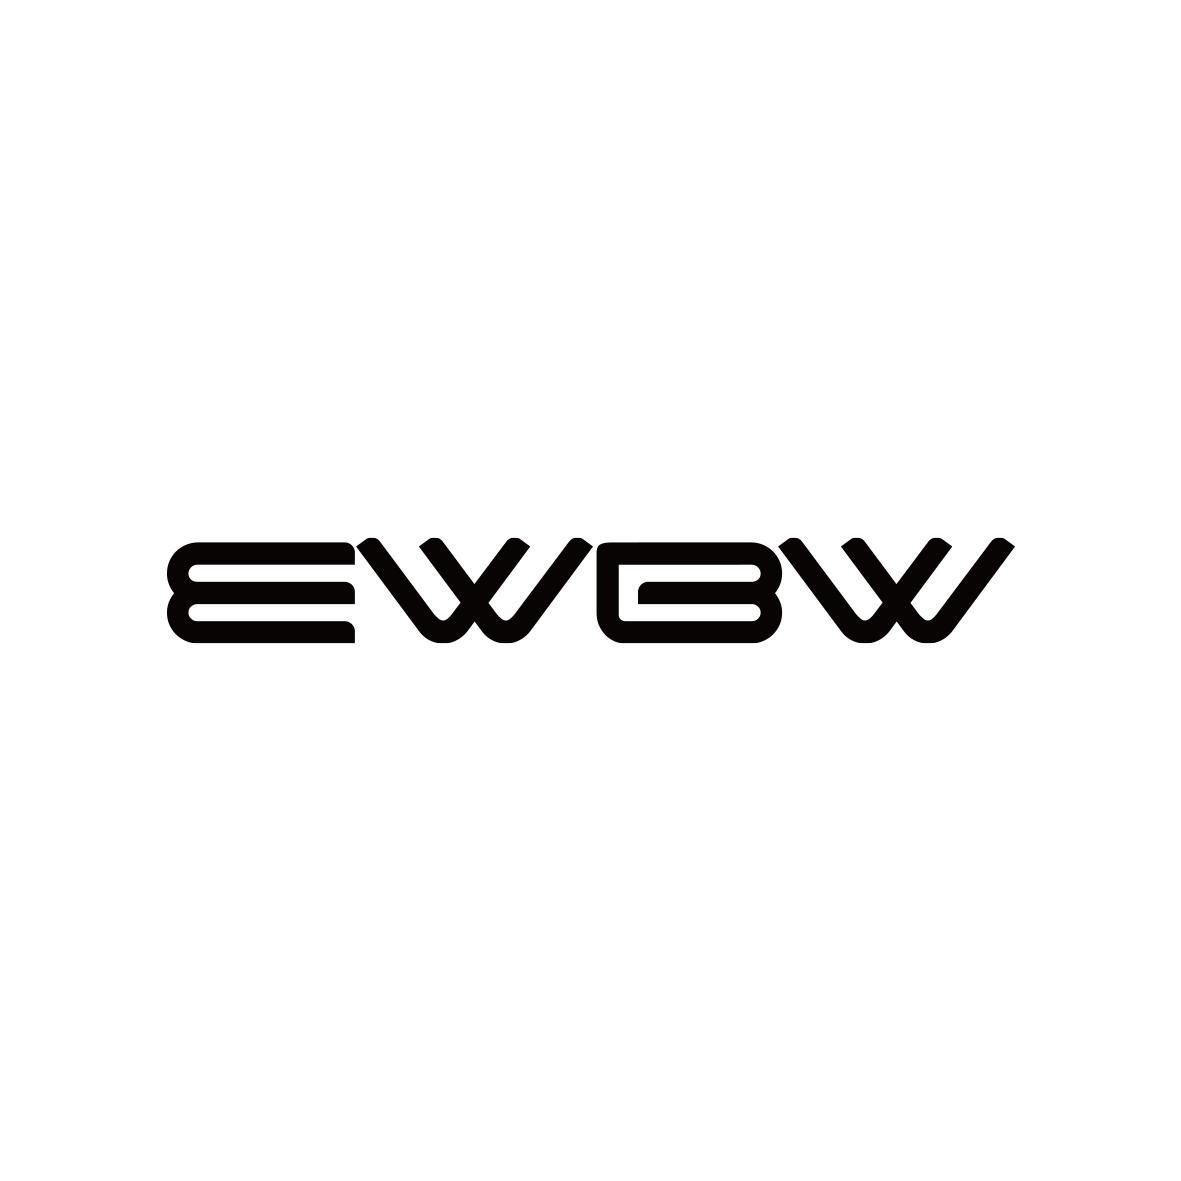 EWBW商标转让